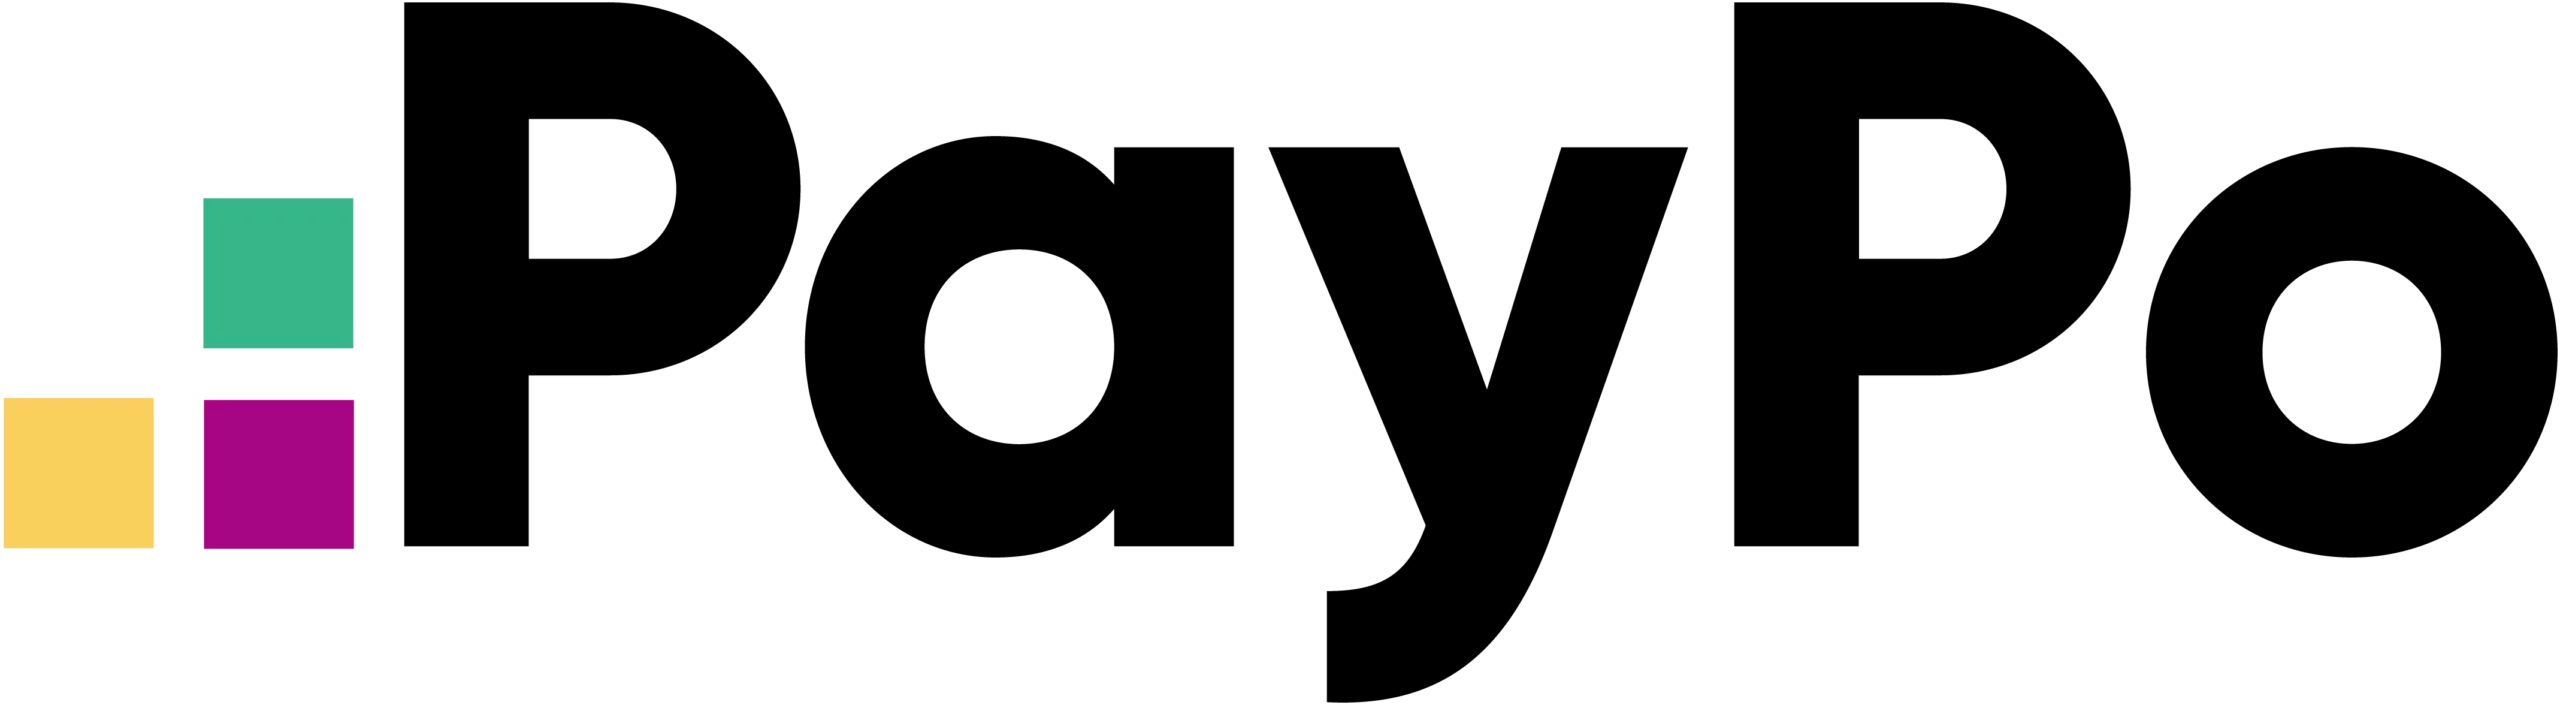 PayPo logo kolor